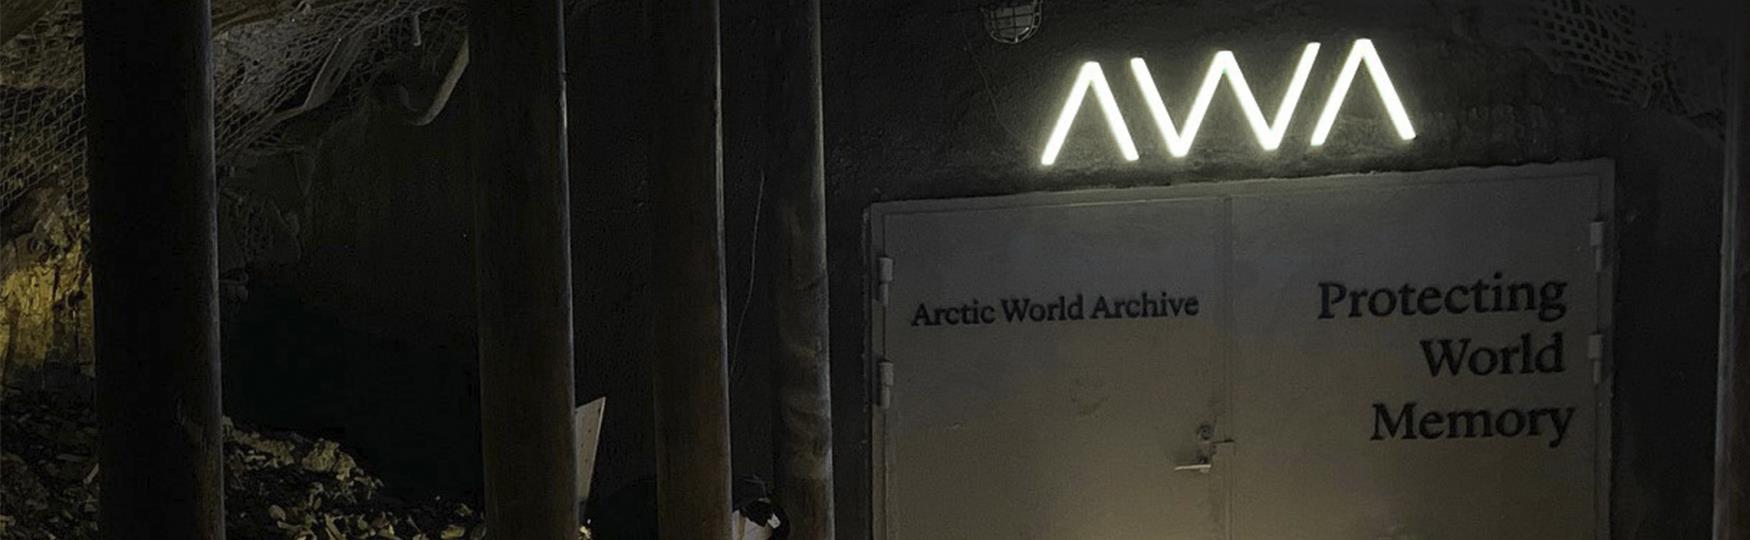 Arctic World Archive